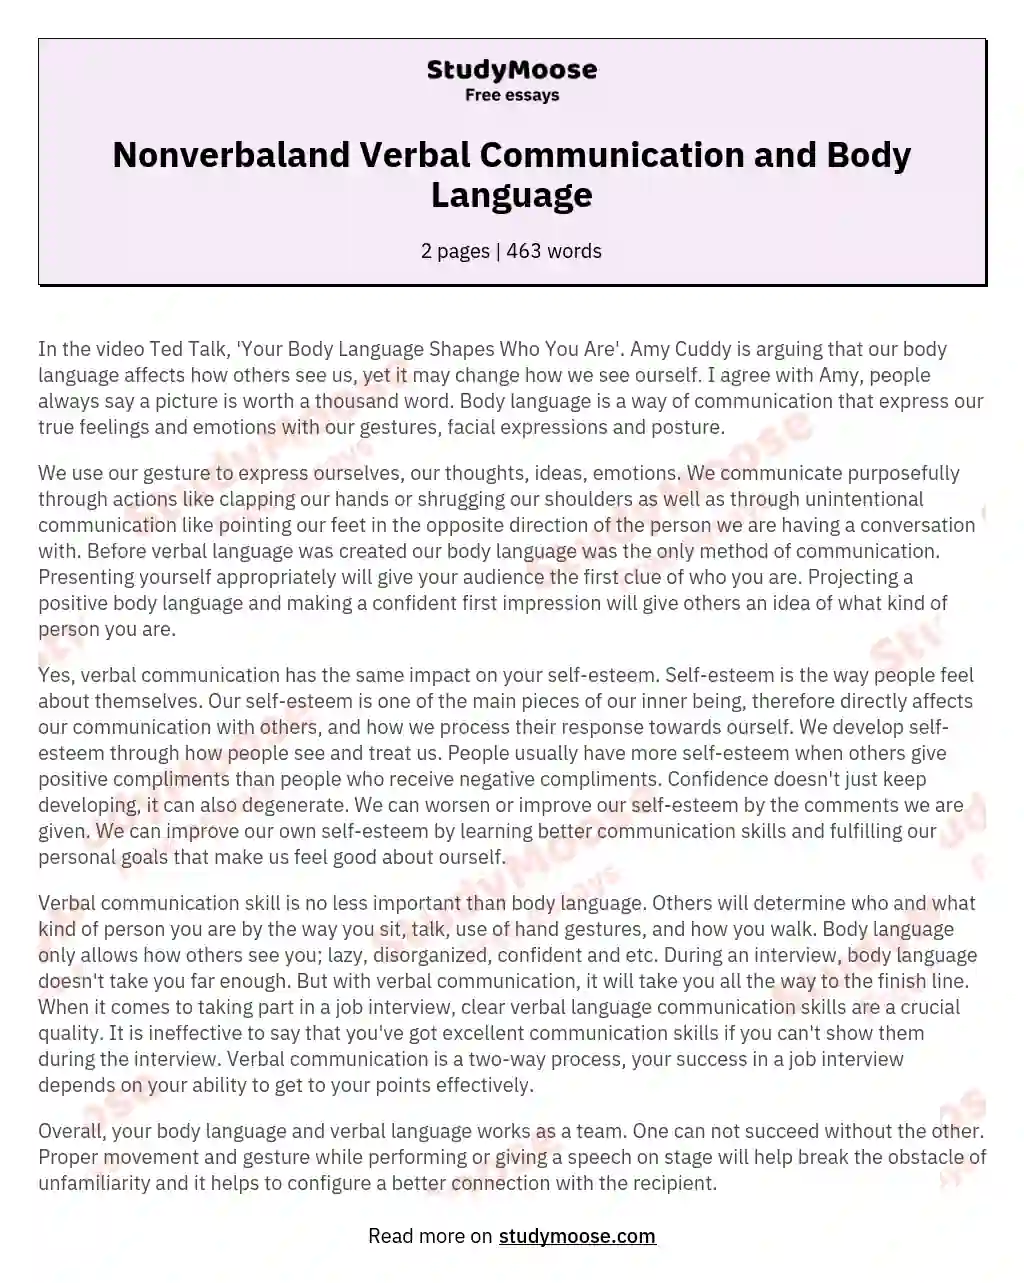 Nonverbaland Verbal Communication and Body Language